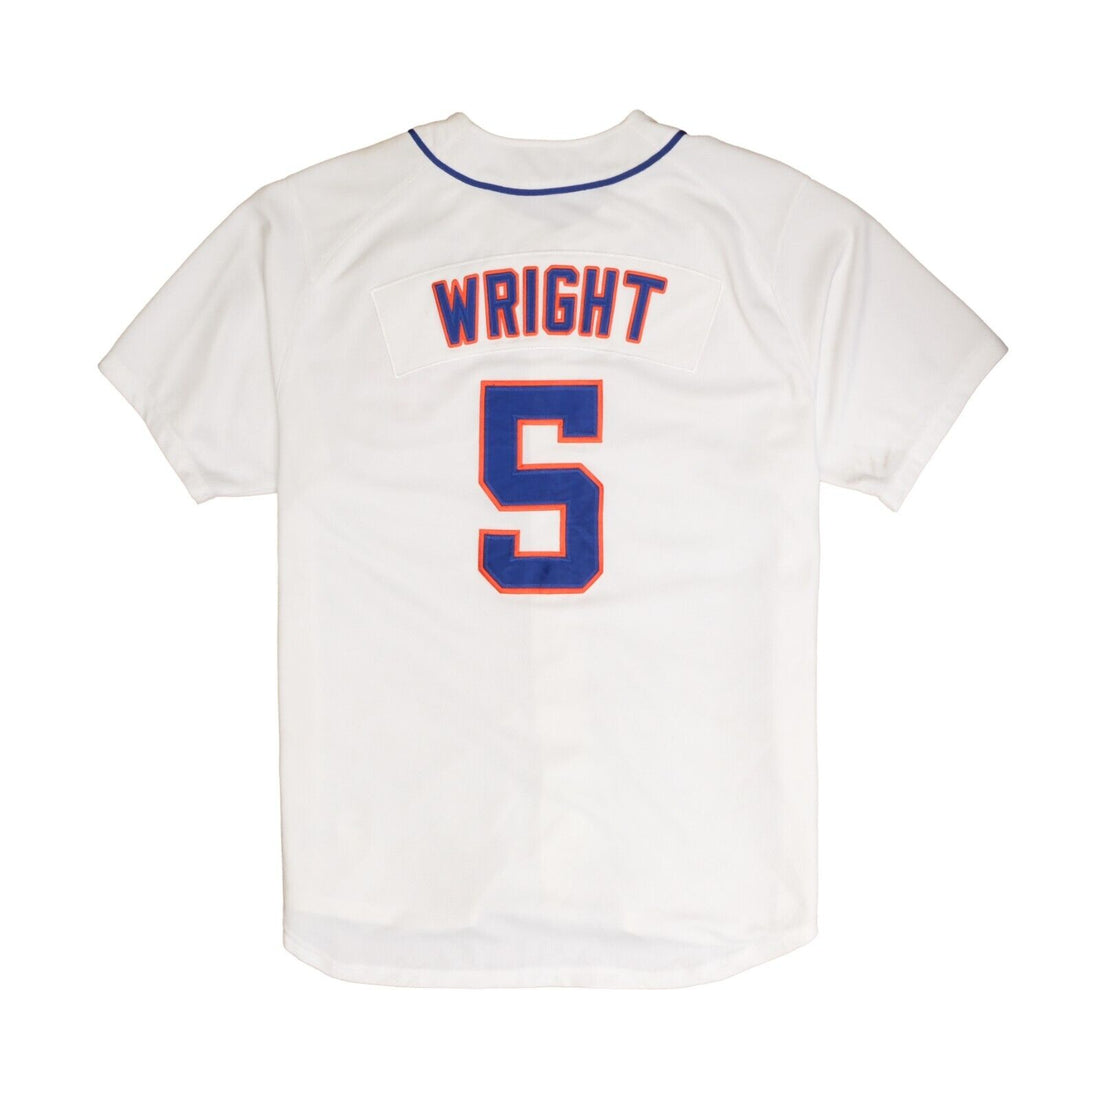 Vintage New York Mets David Wright Nike Jersey Size Large 